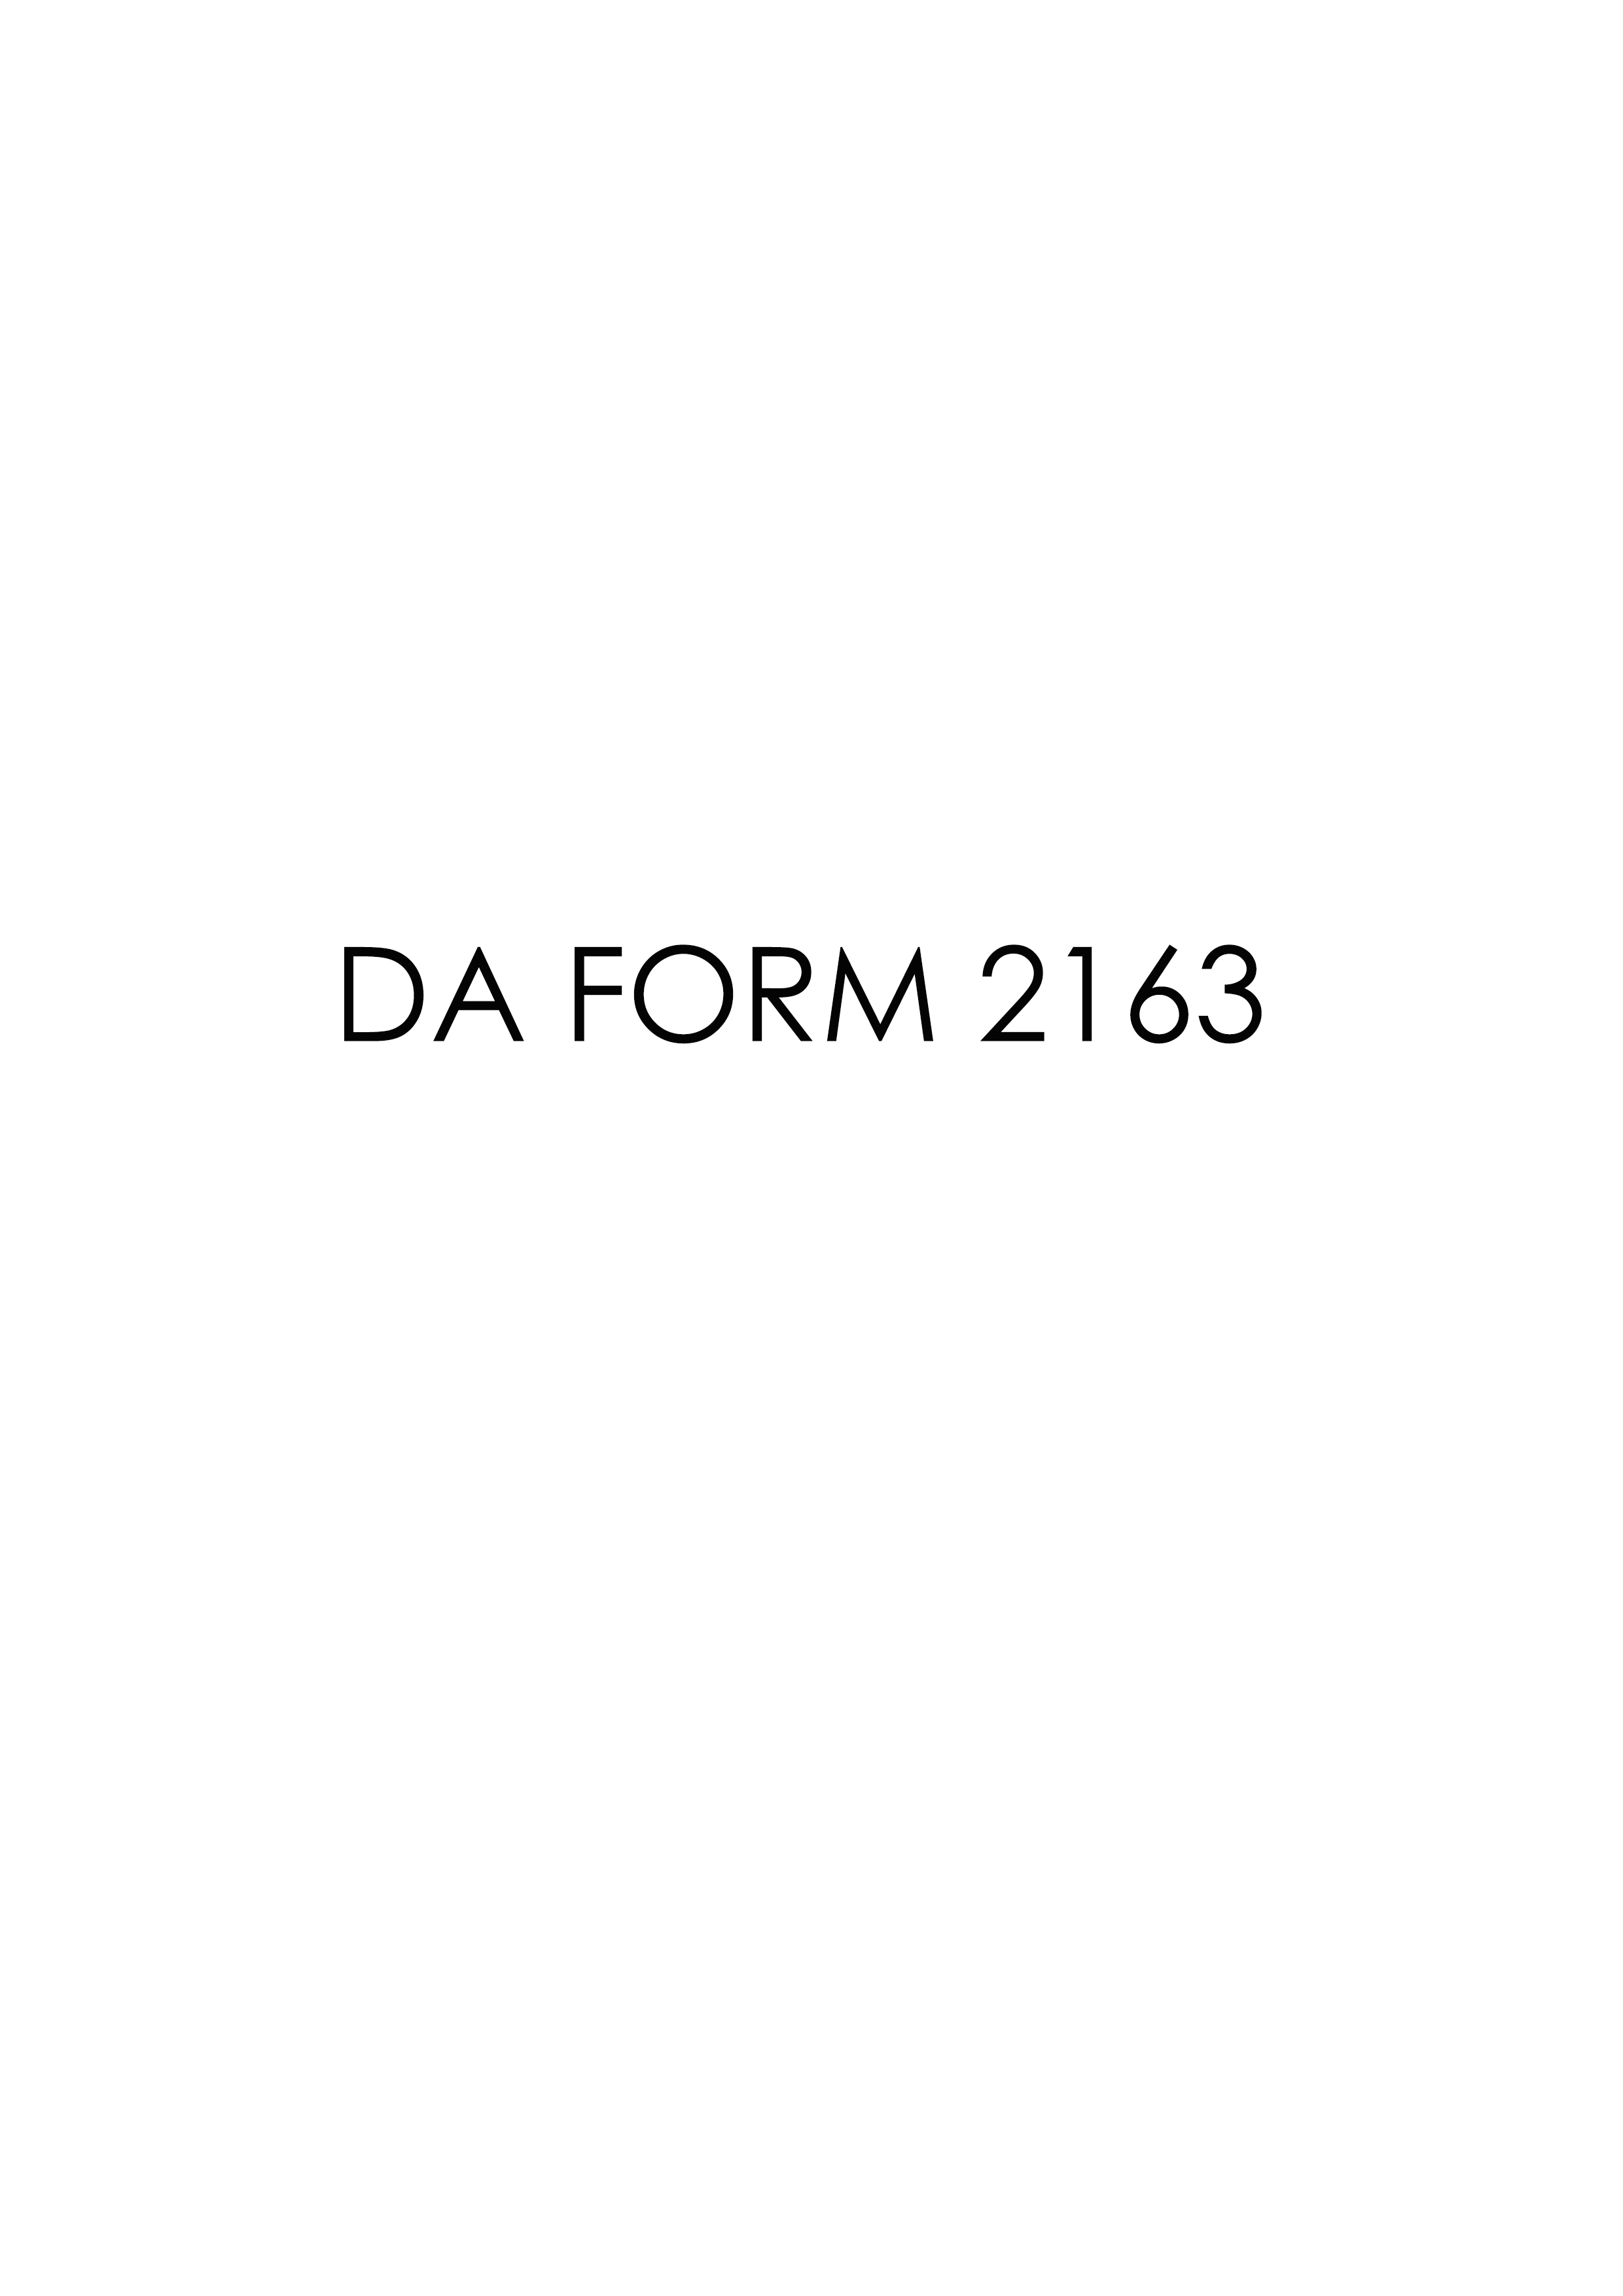 Download da 2163 Form